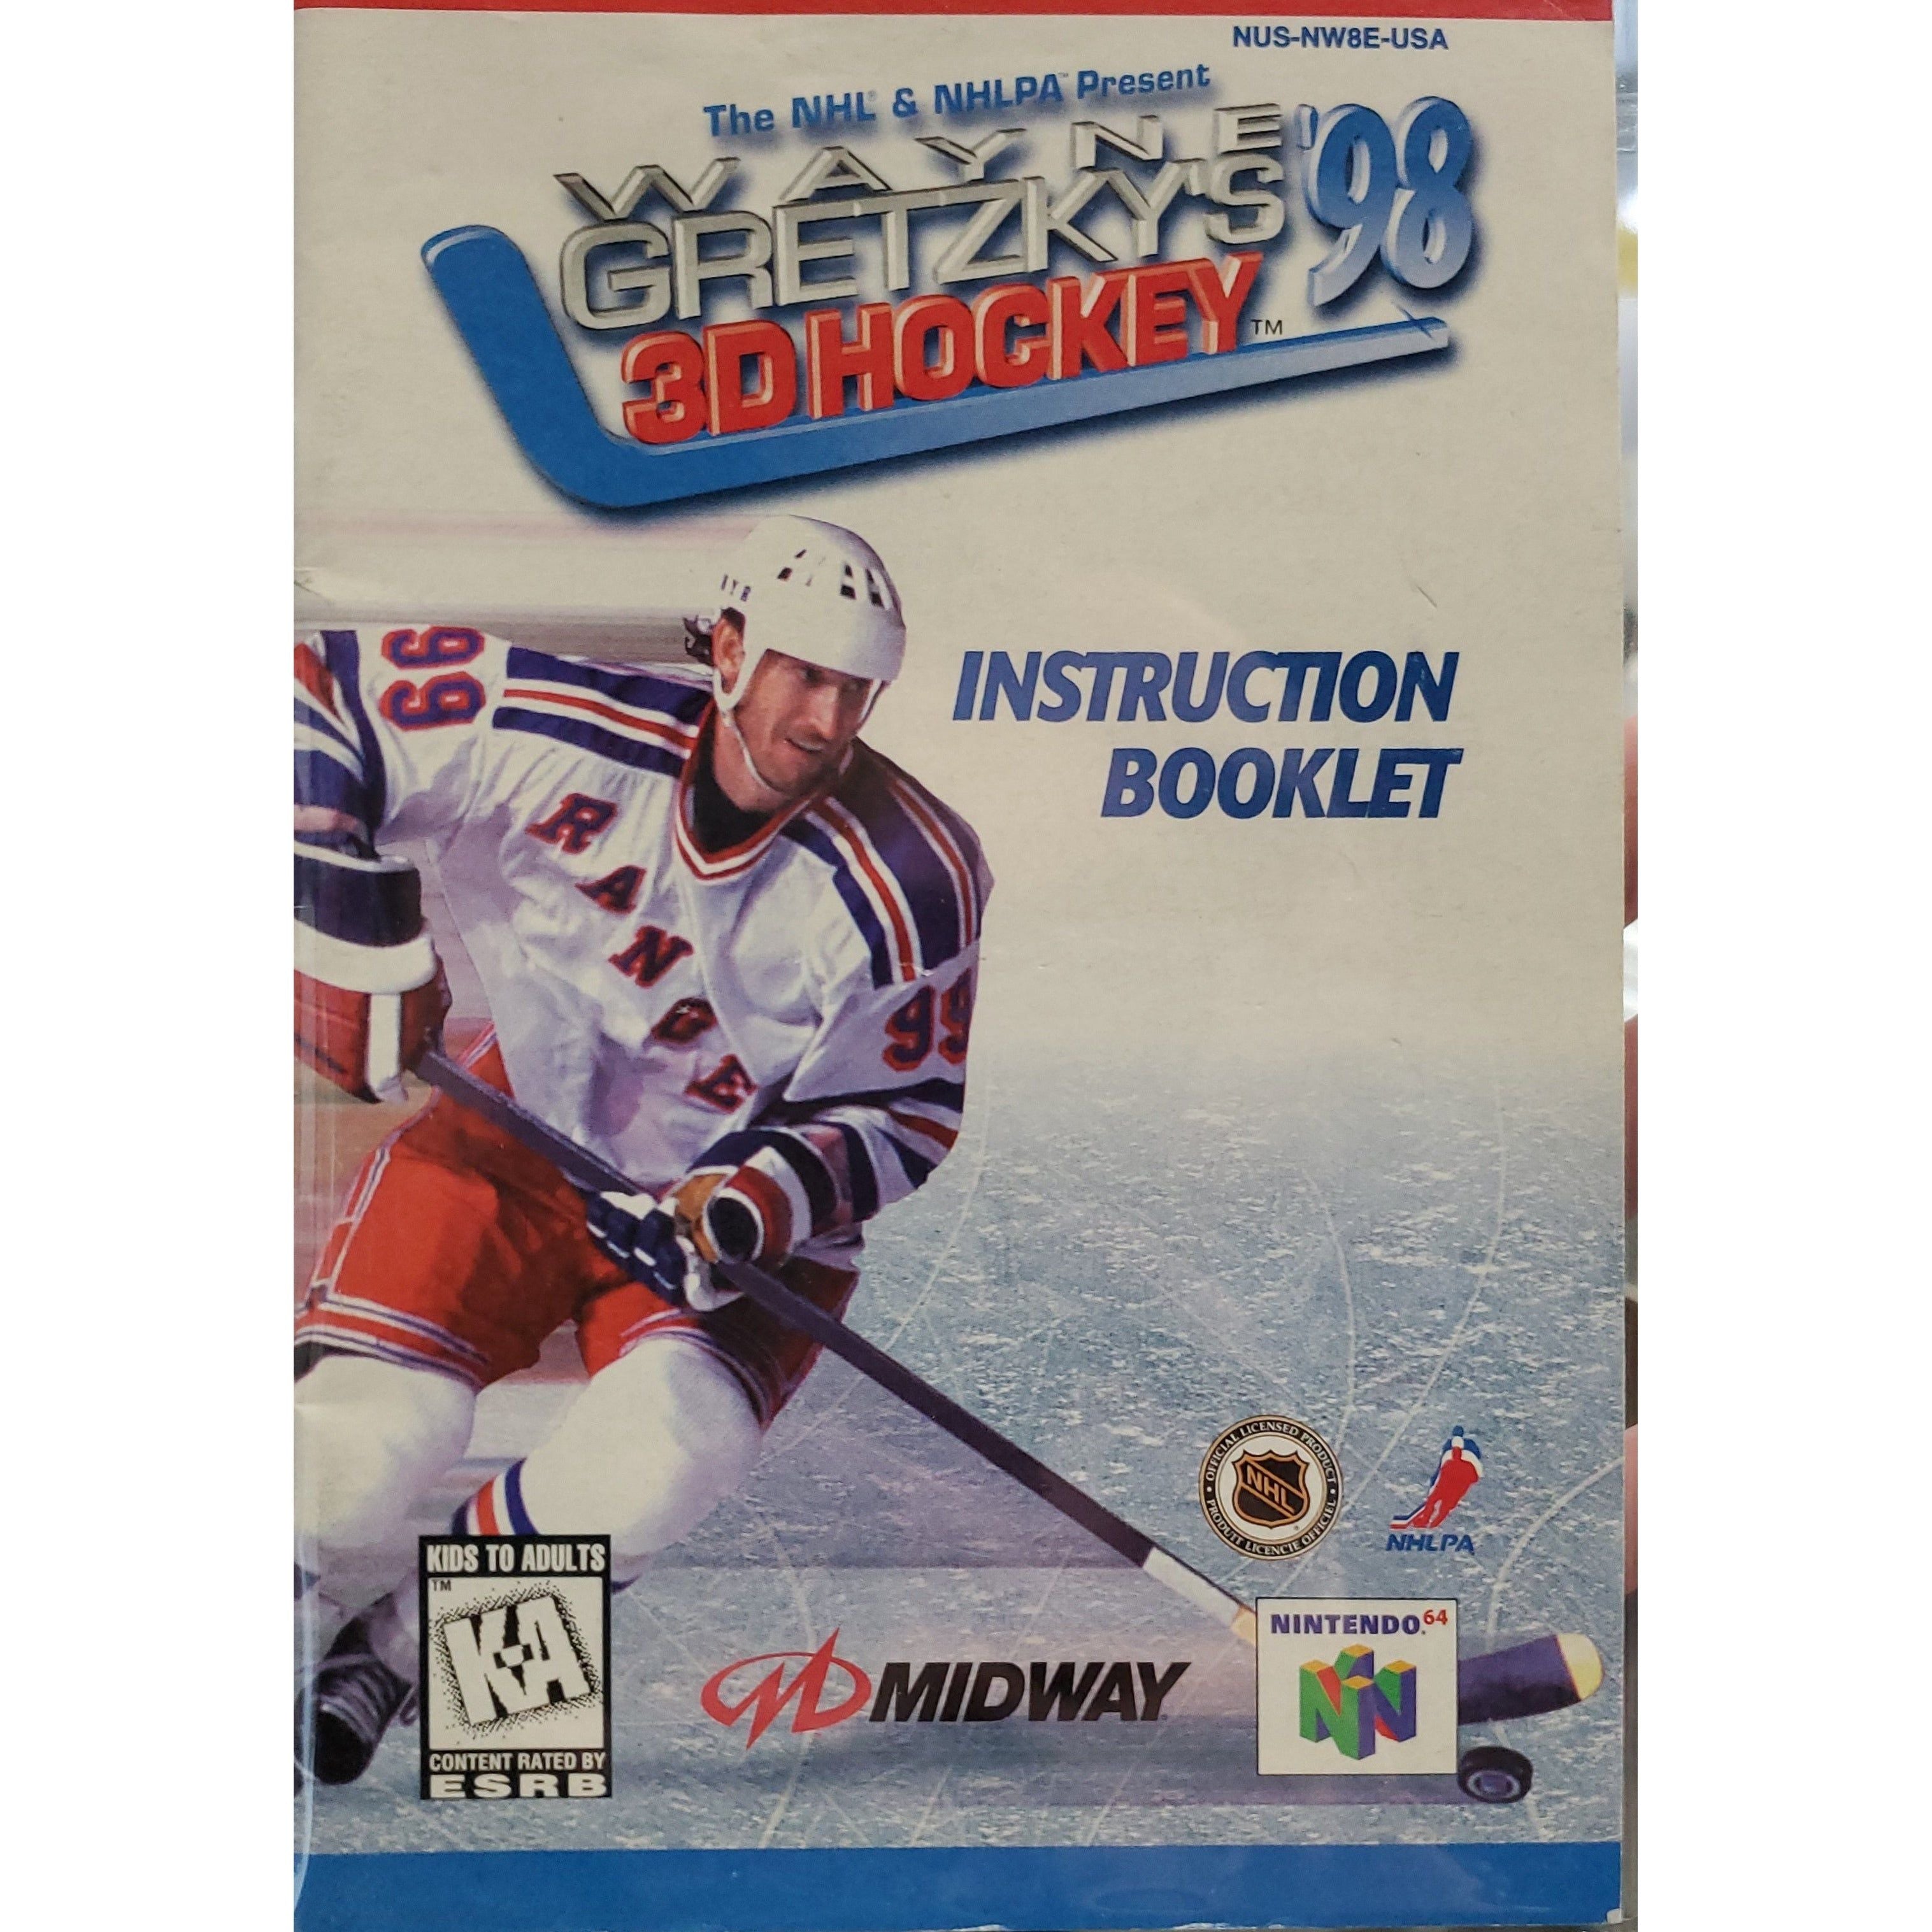 N64 - Wayne Gretzky's 3D Hockey 98 (Manual)